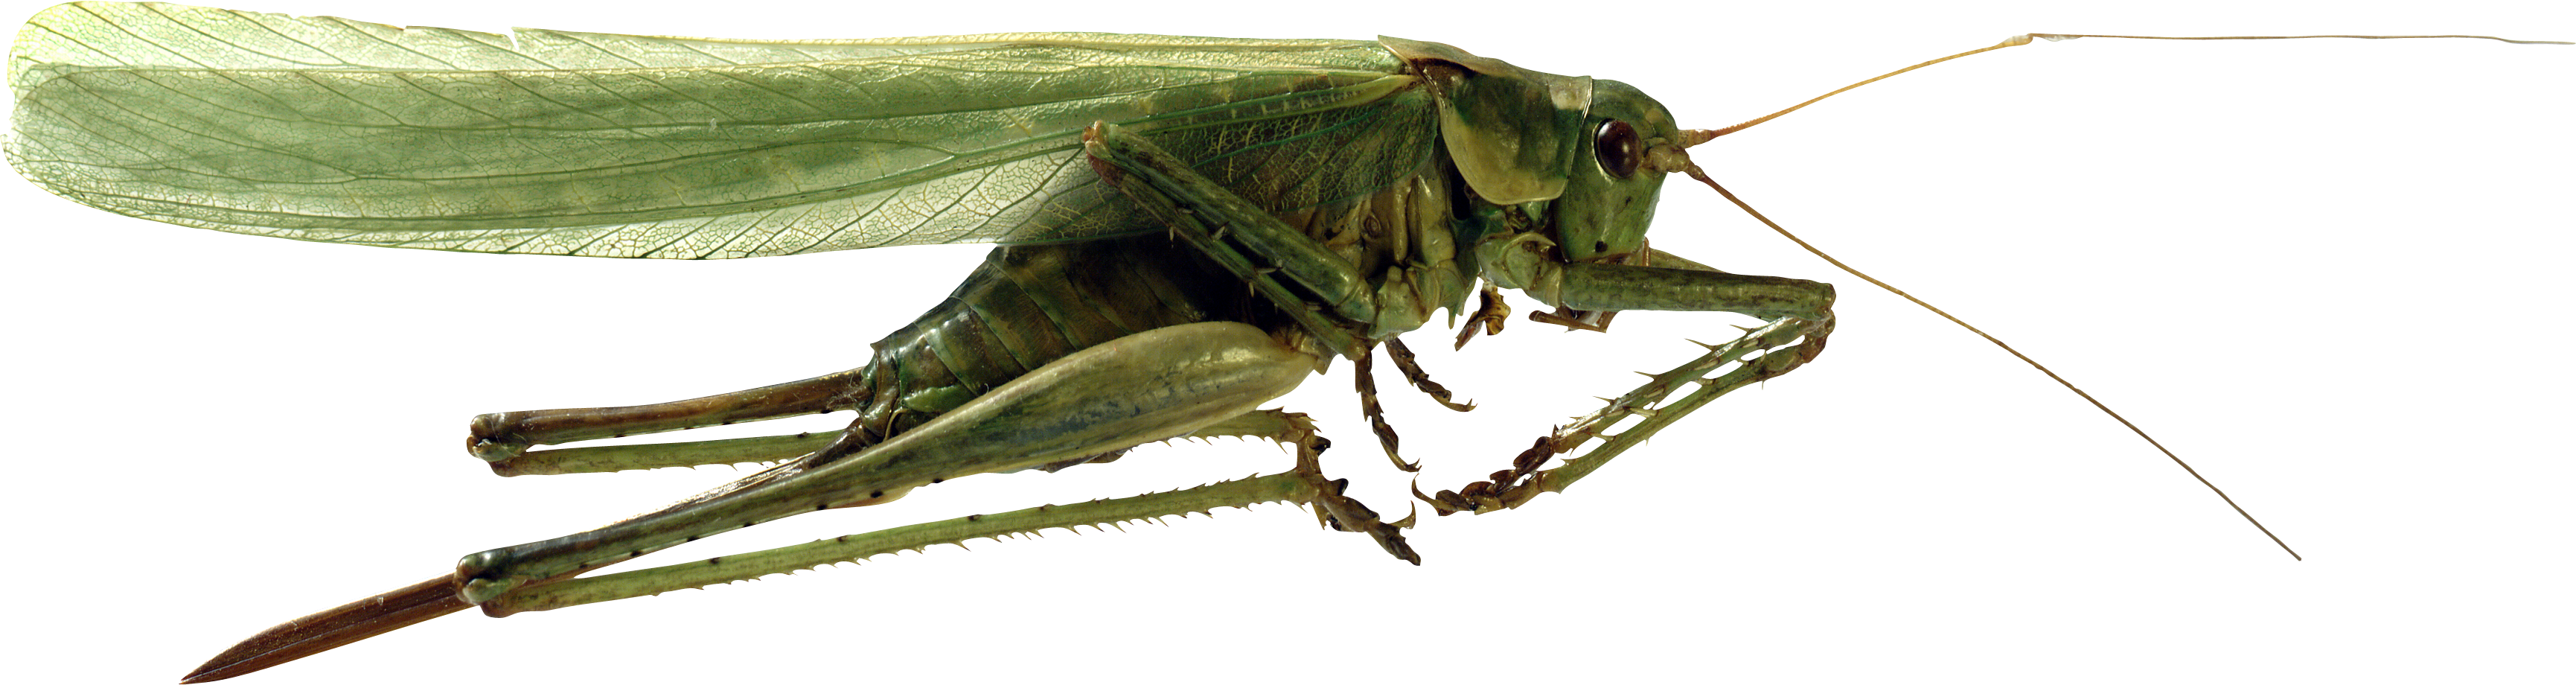 Grasshopper PNG